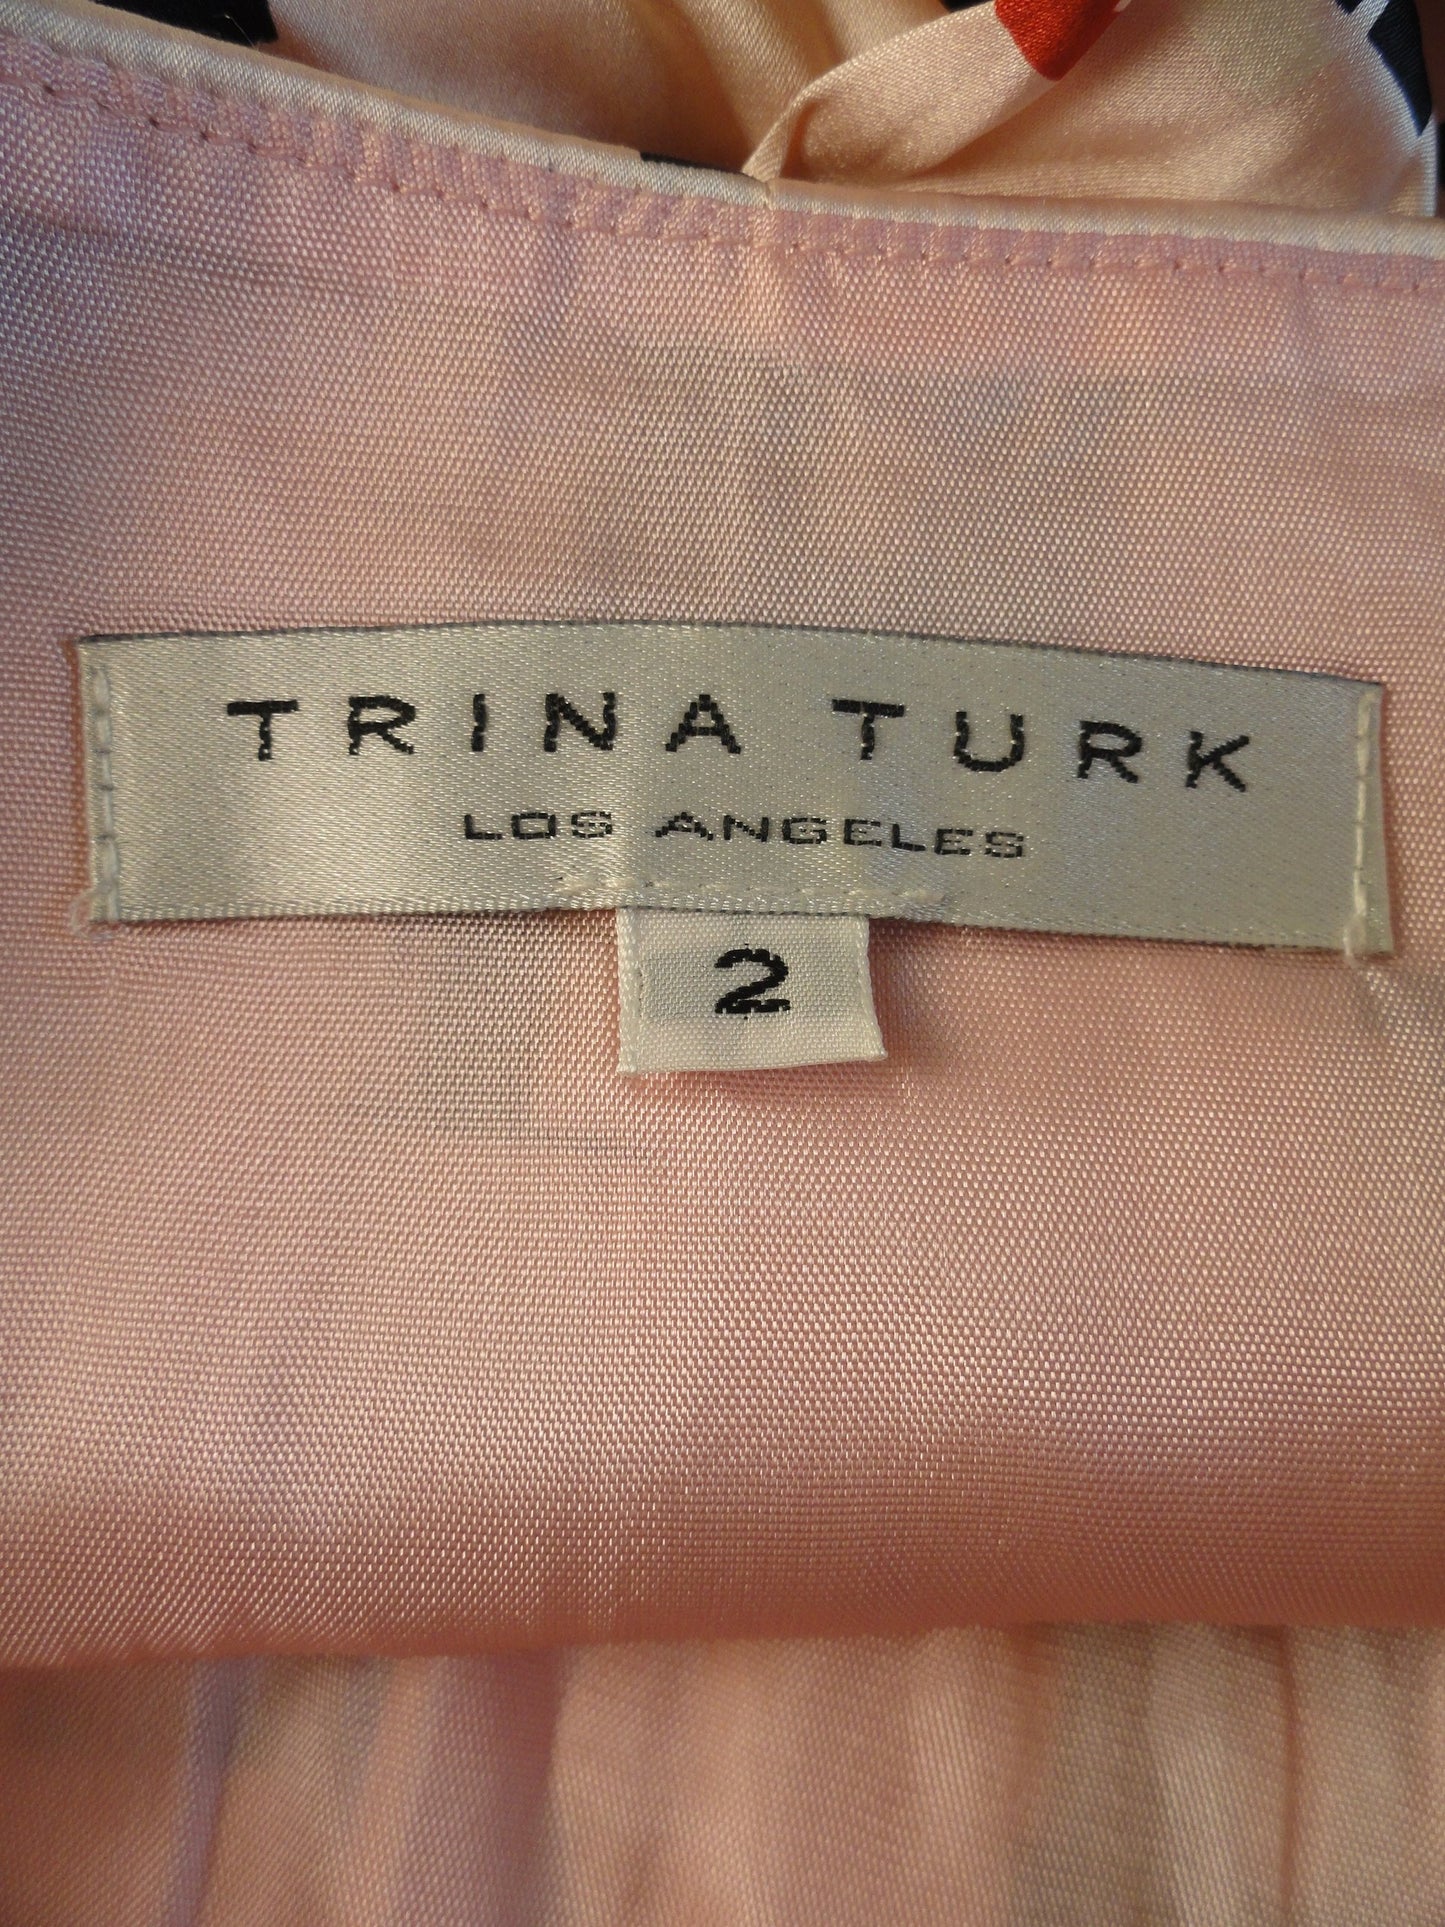 Trina Turk 80's Petites Style Skirt  Pink Sz 2P SKU 000202